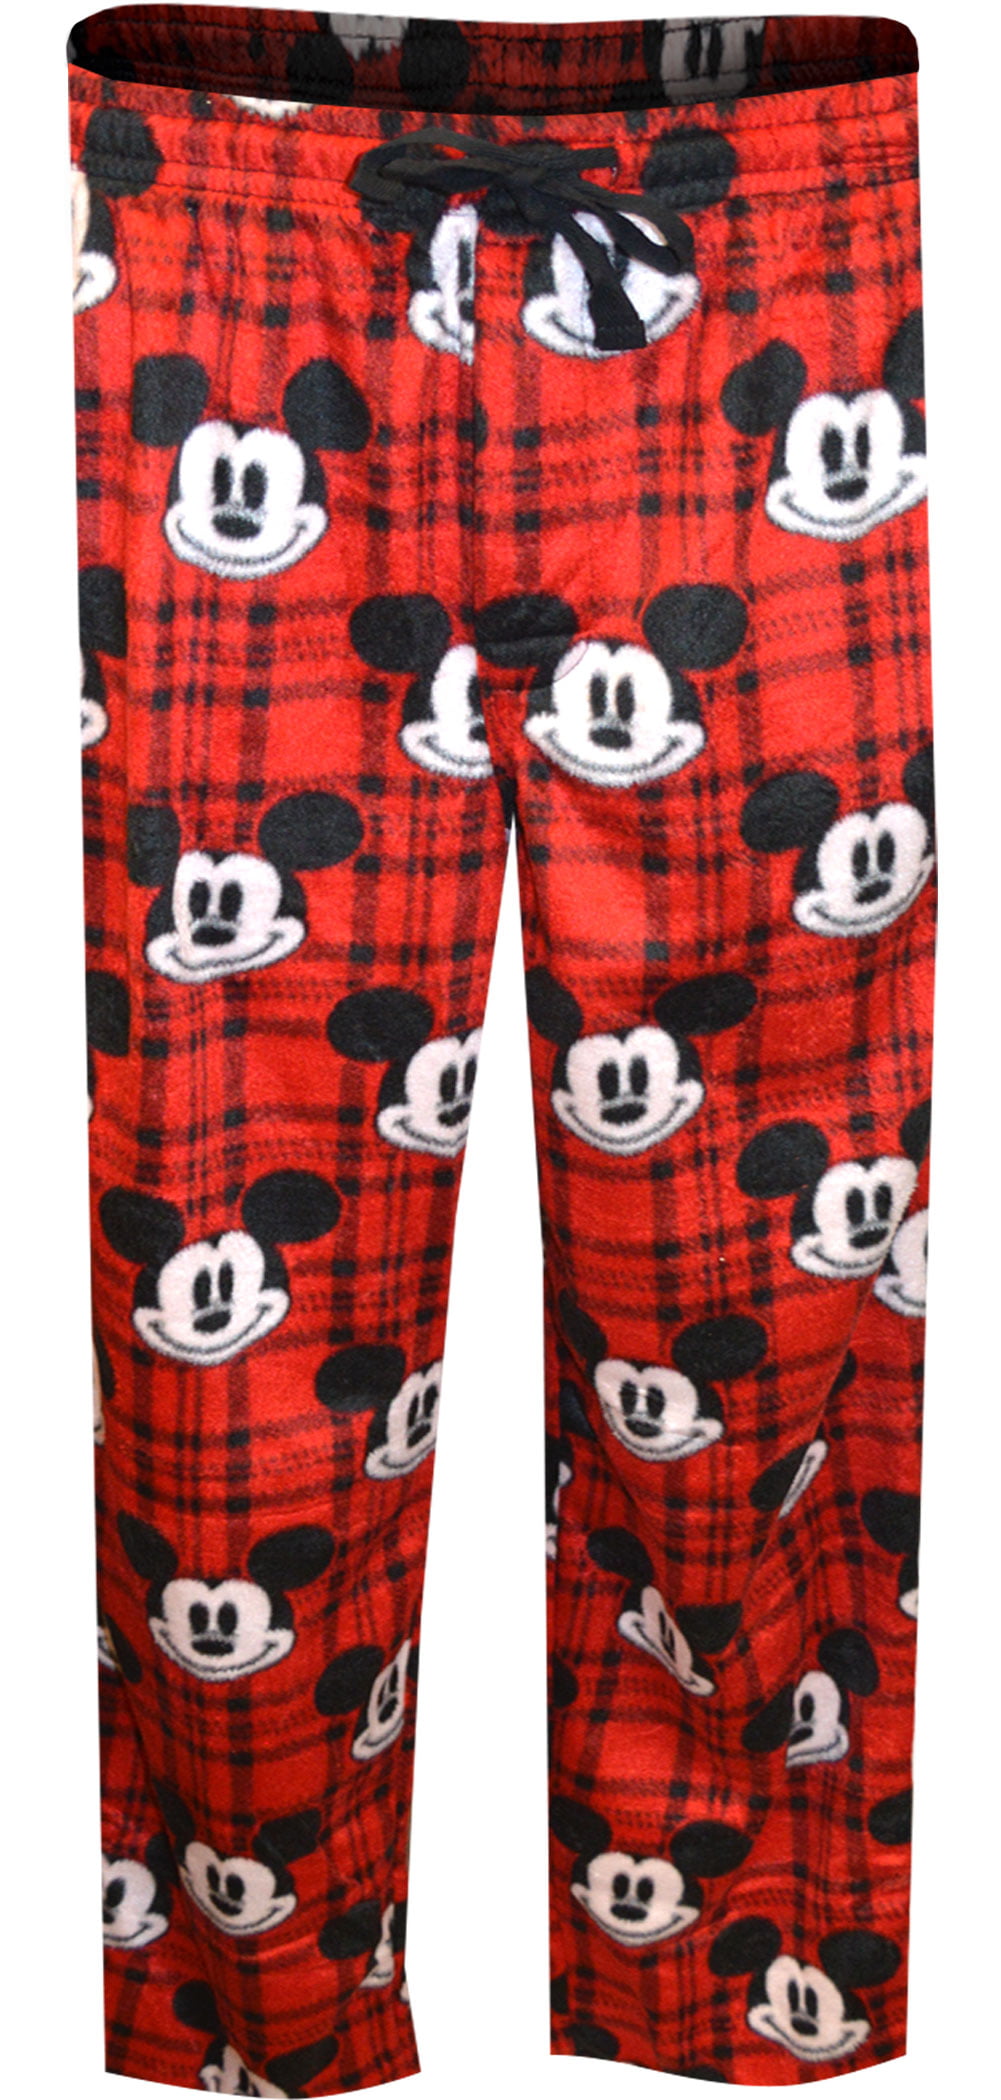 Mens Pyjama Bottoms Disney Mr Grumpy Lounge PJ Pants Cotton S M L XL 